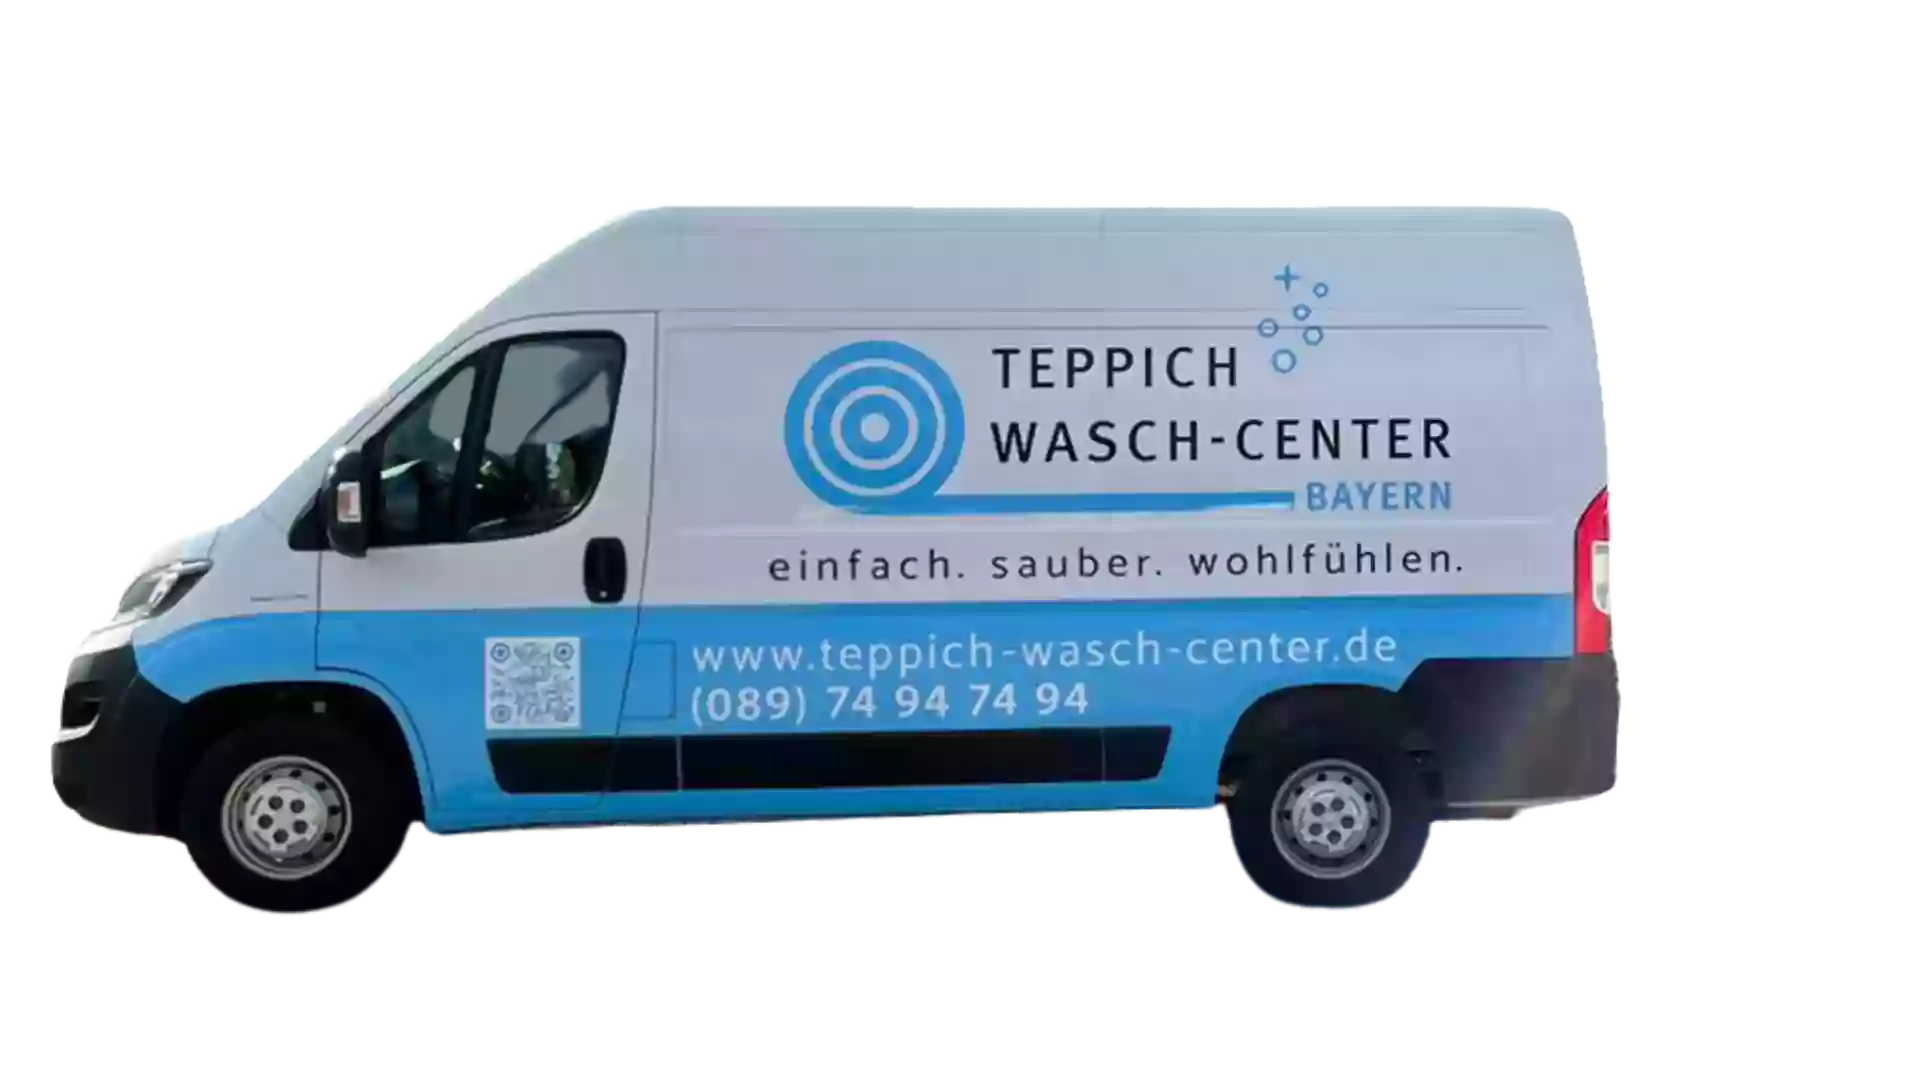 Teppich-Wasch-Center Bayern A. Kriwy GmbH